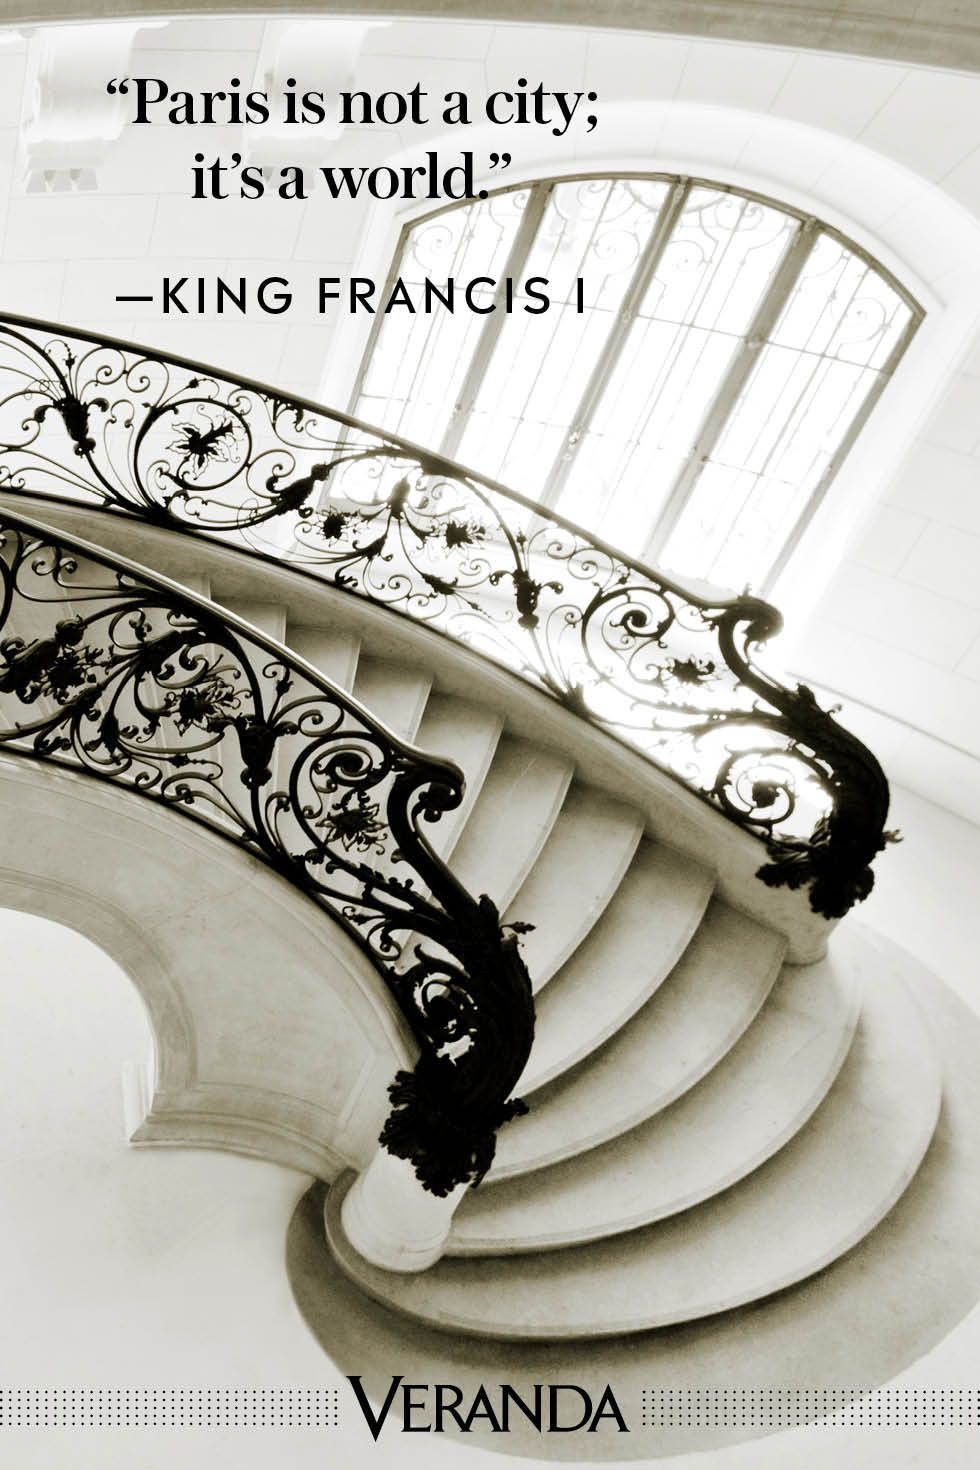 Veranda Paris quotes king francis 1